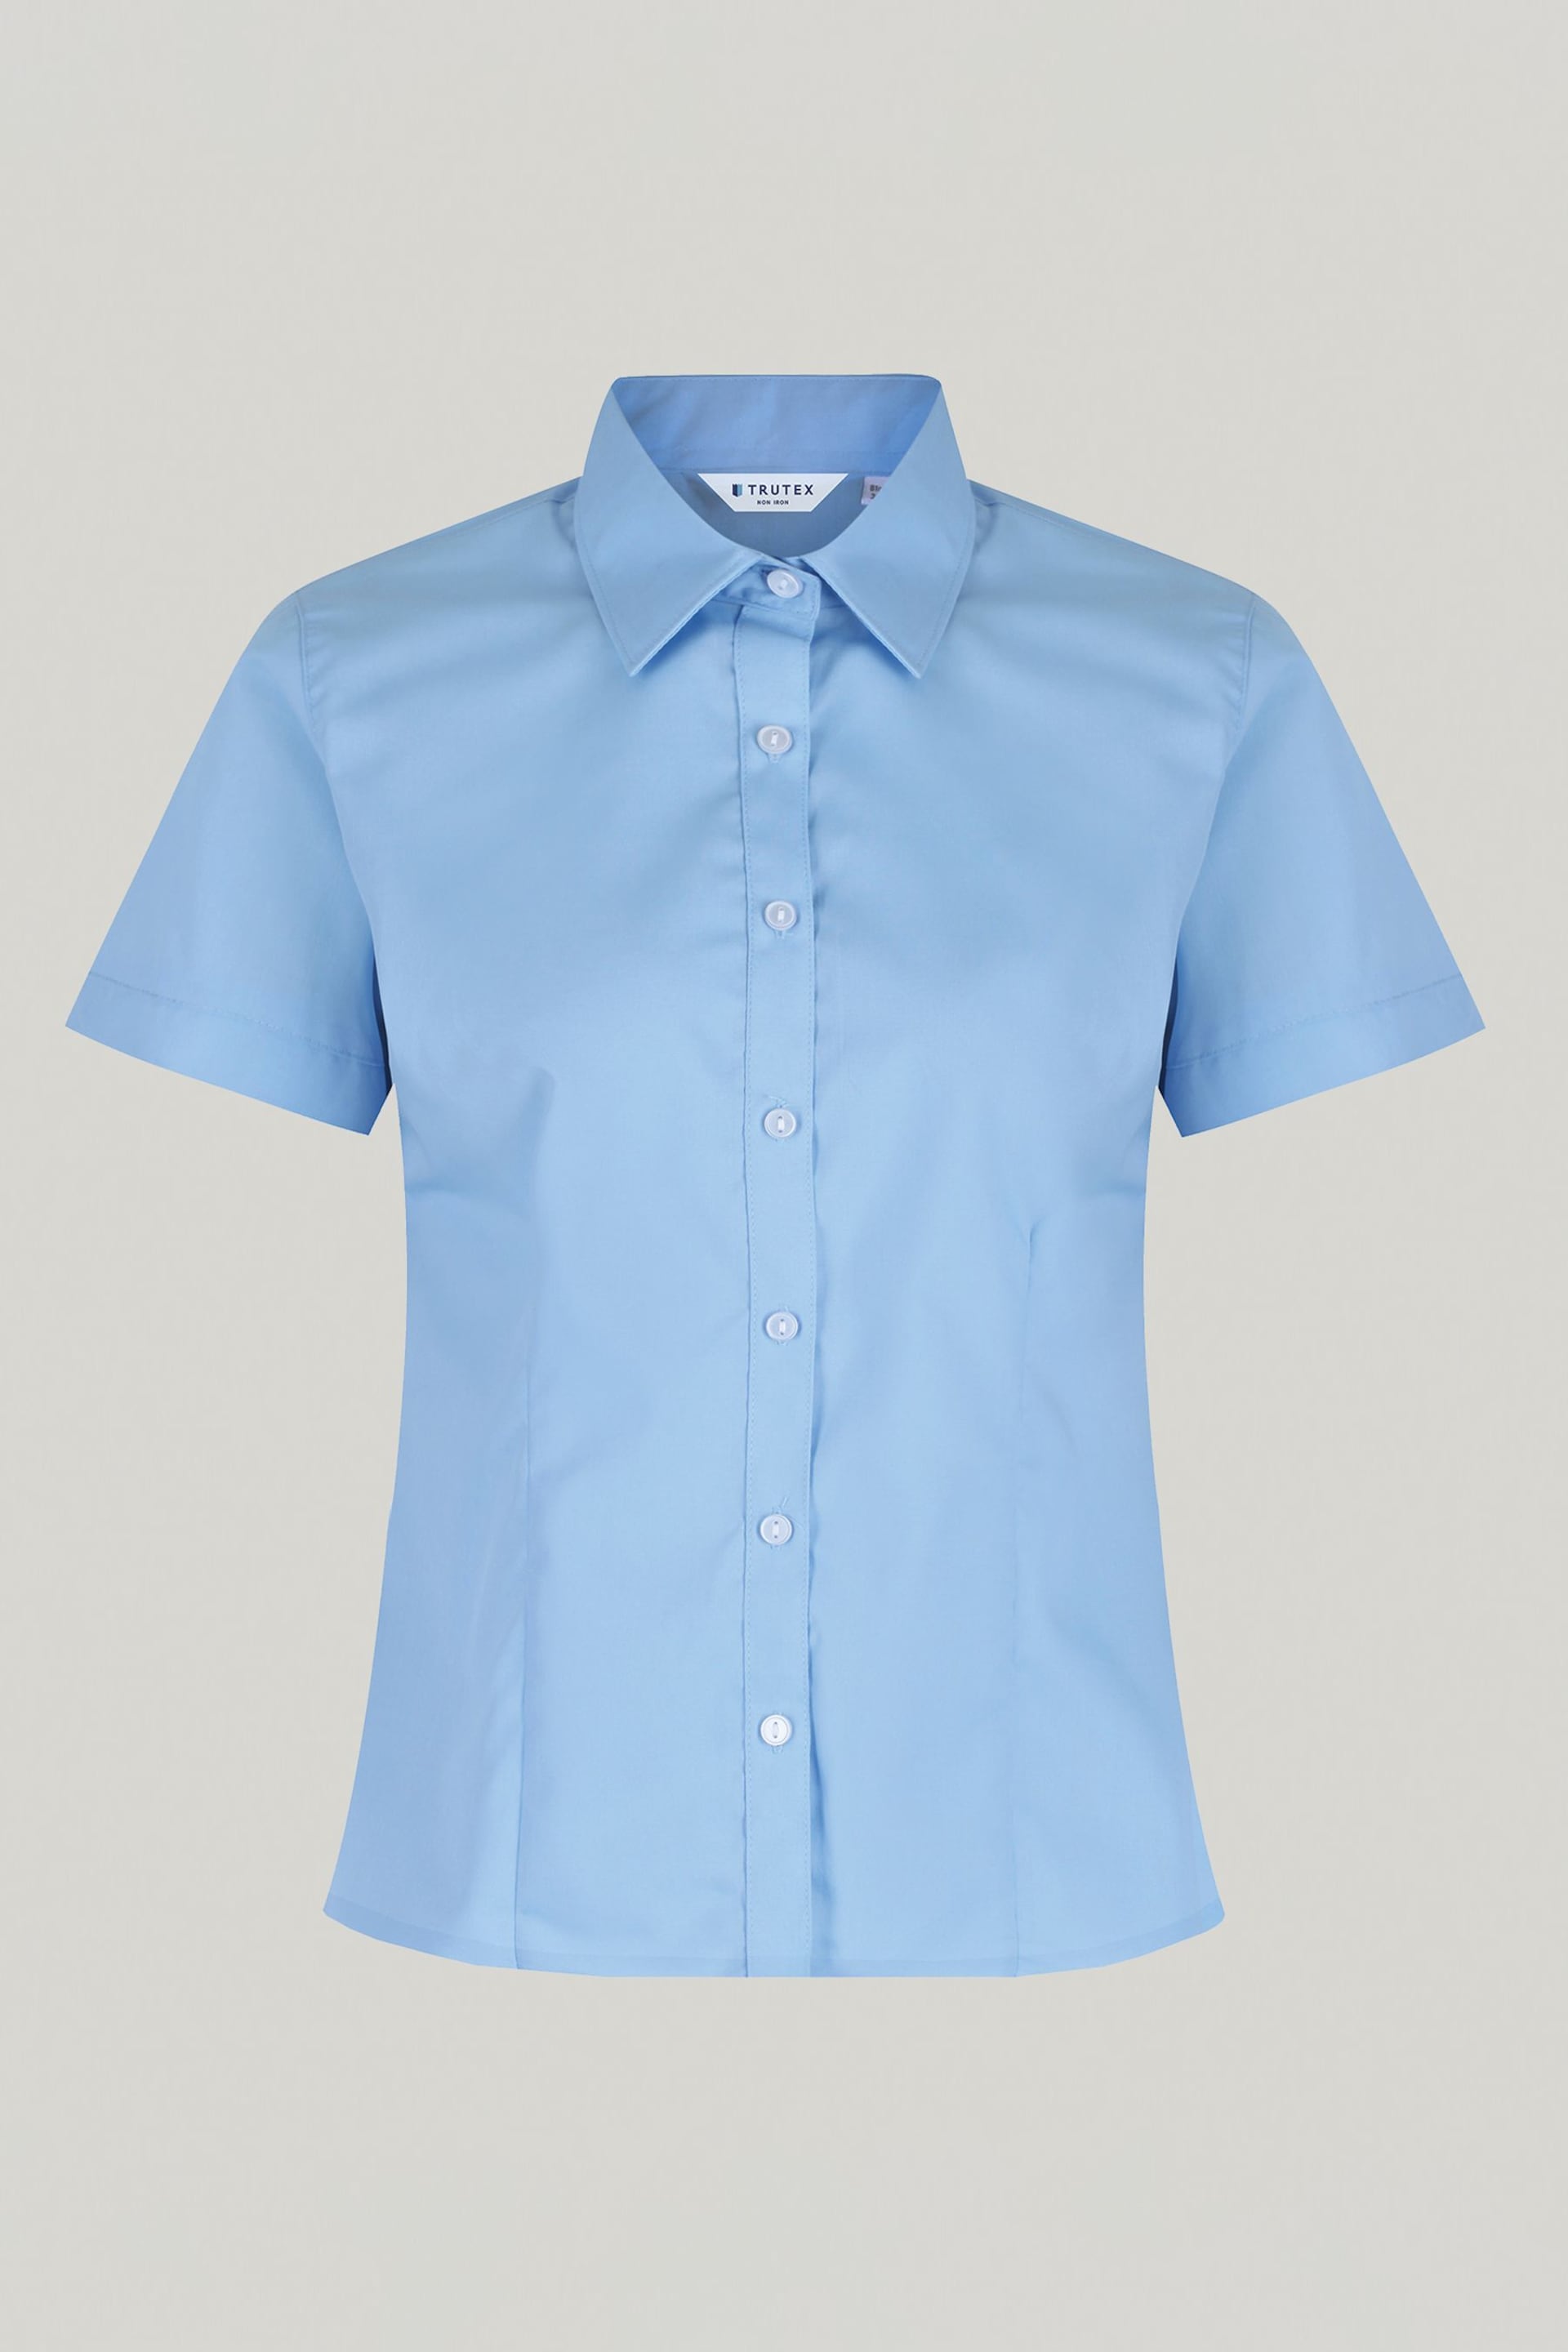 Trutex Blue Slim Fit Short Sleeve 2 Pack School Shirts - Image 5 of 6